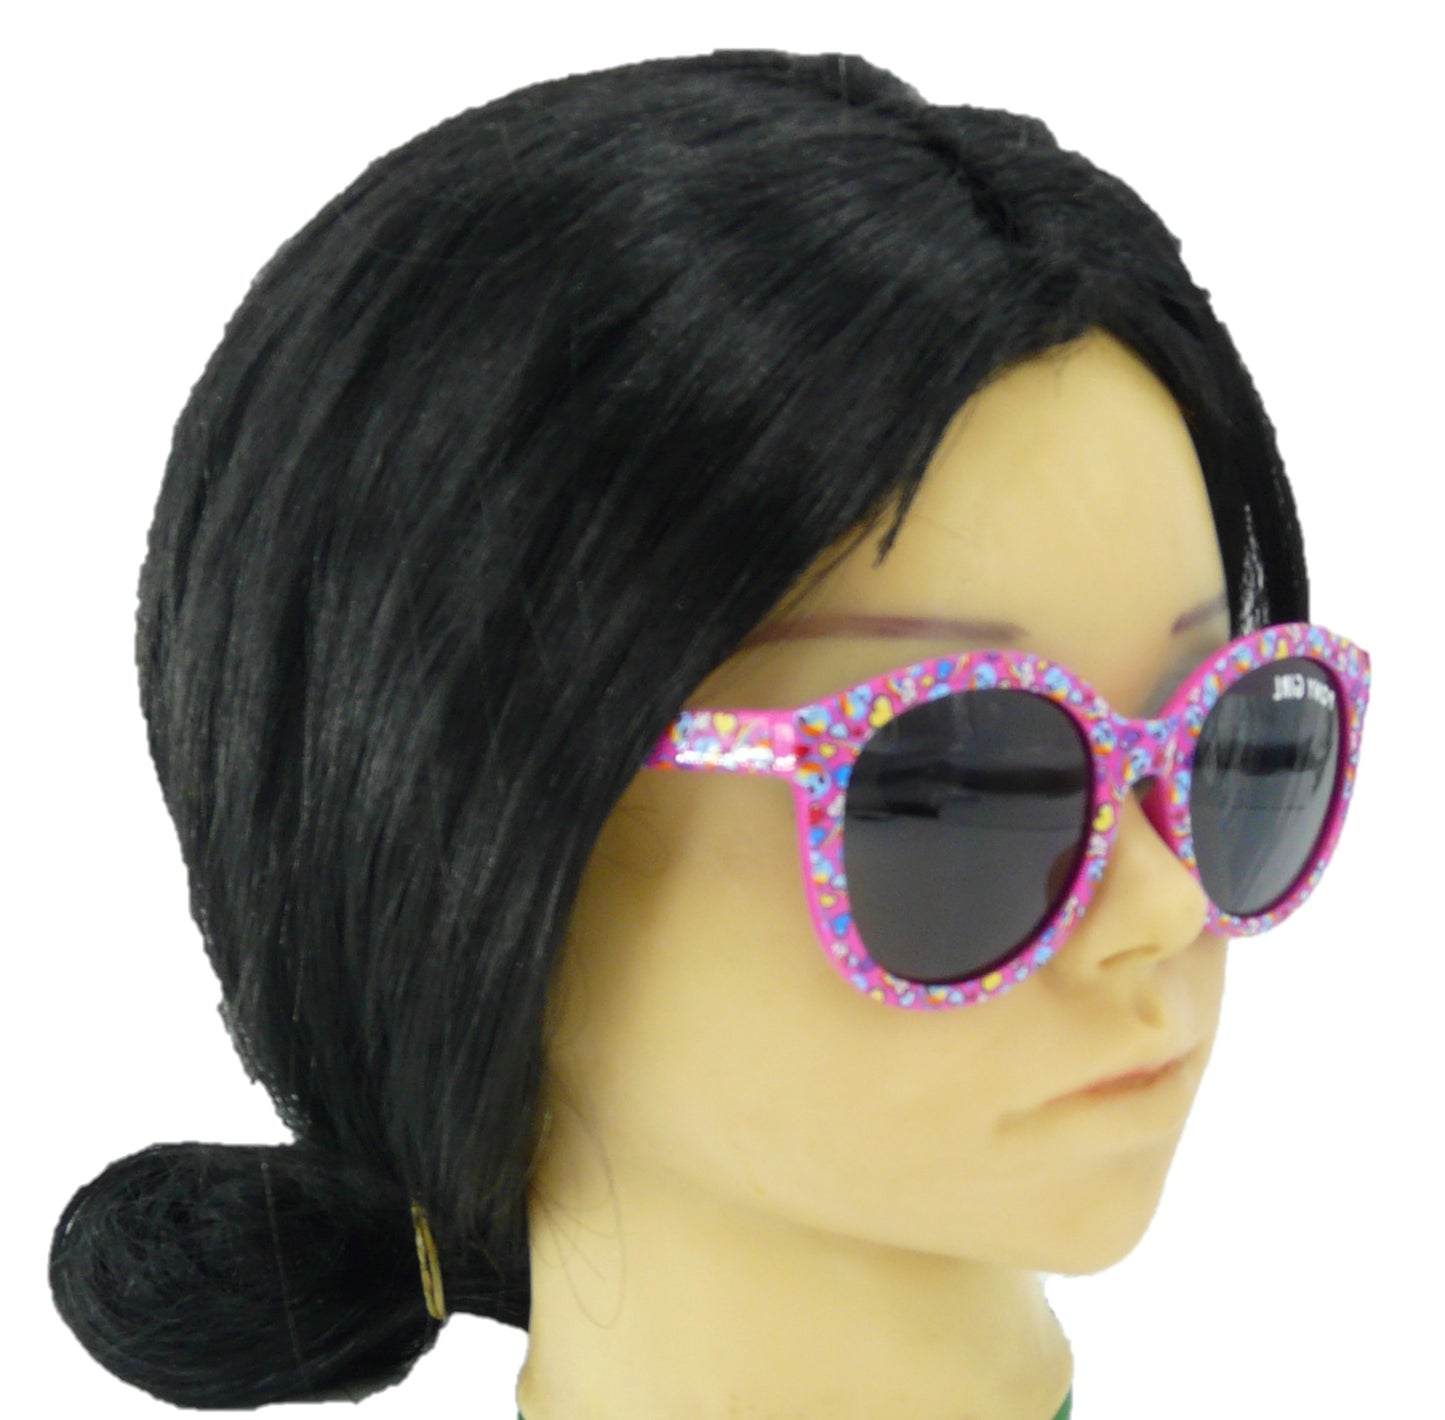 My Little Pony Girl's Pink Sunglasses